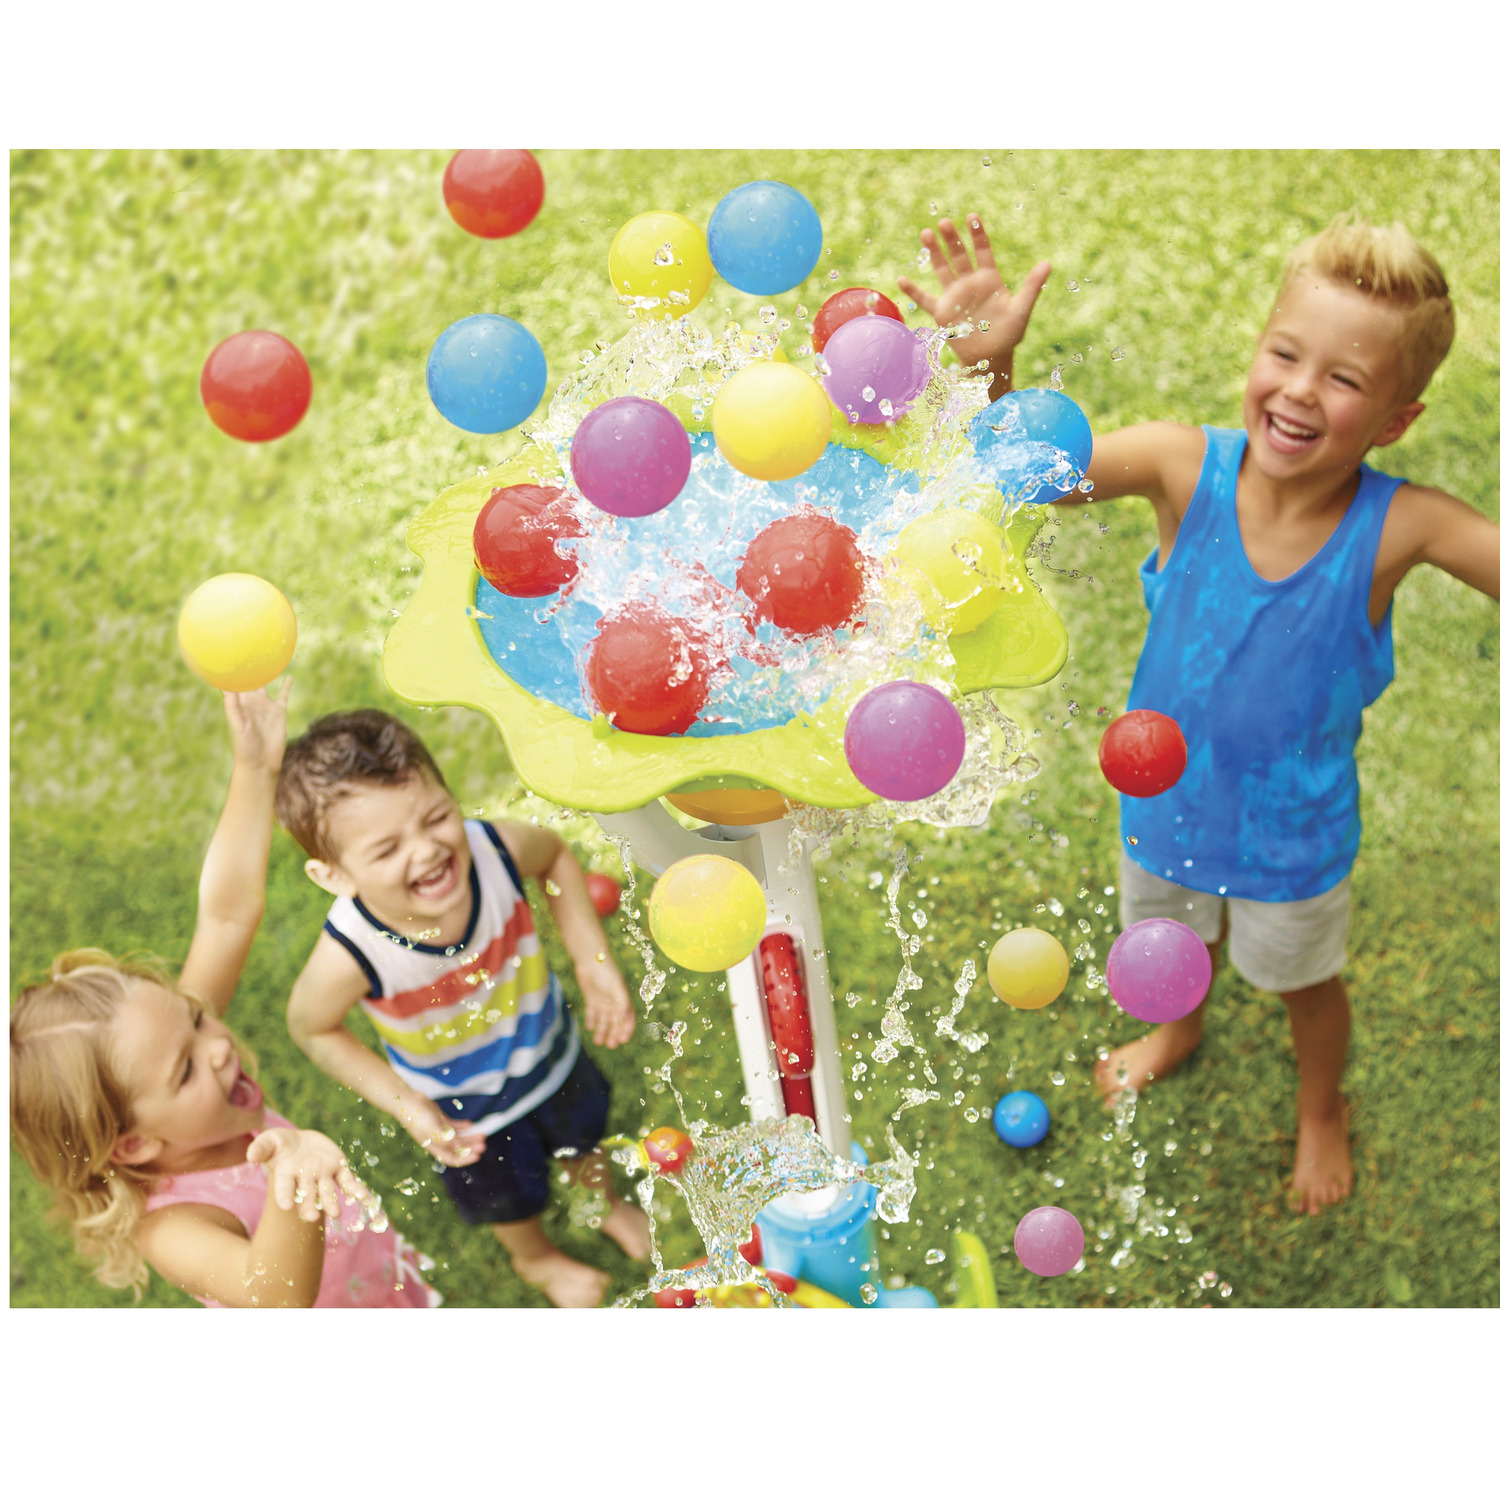 Little Tikes Fun Zone Pop 'N Splash Surprise Game for Kids + Balls